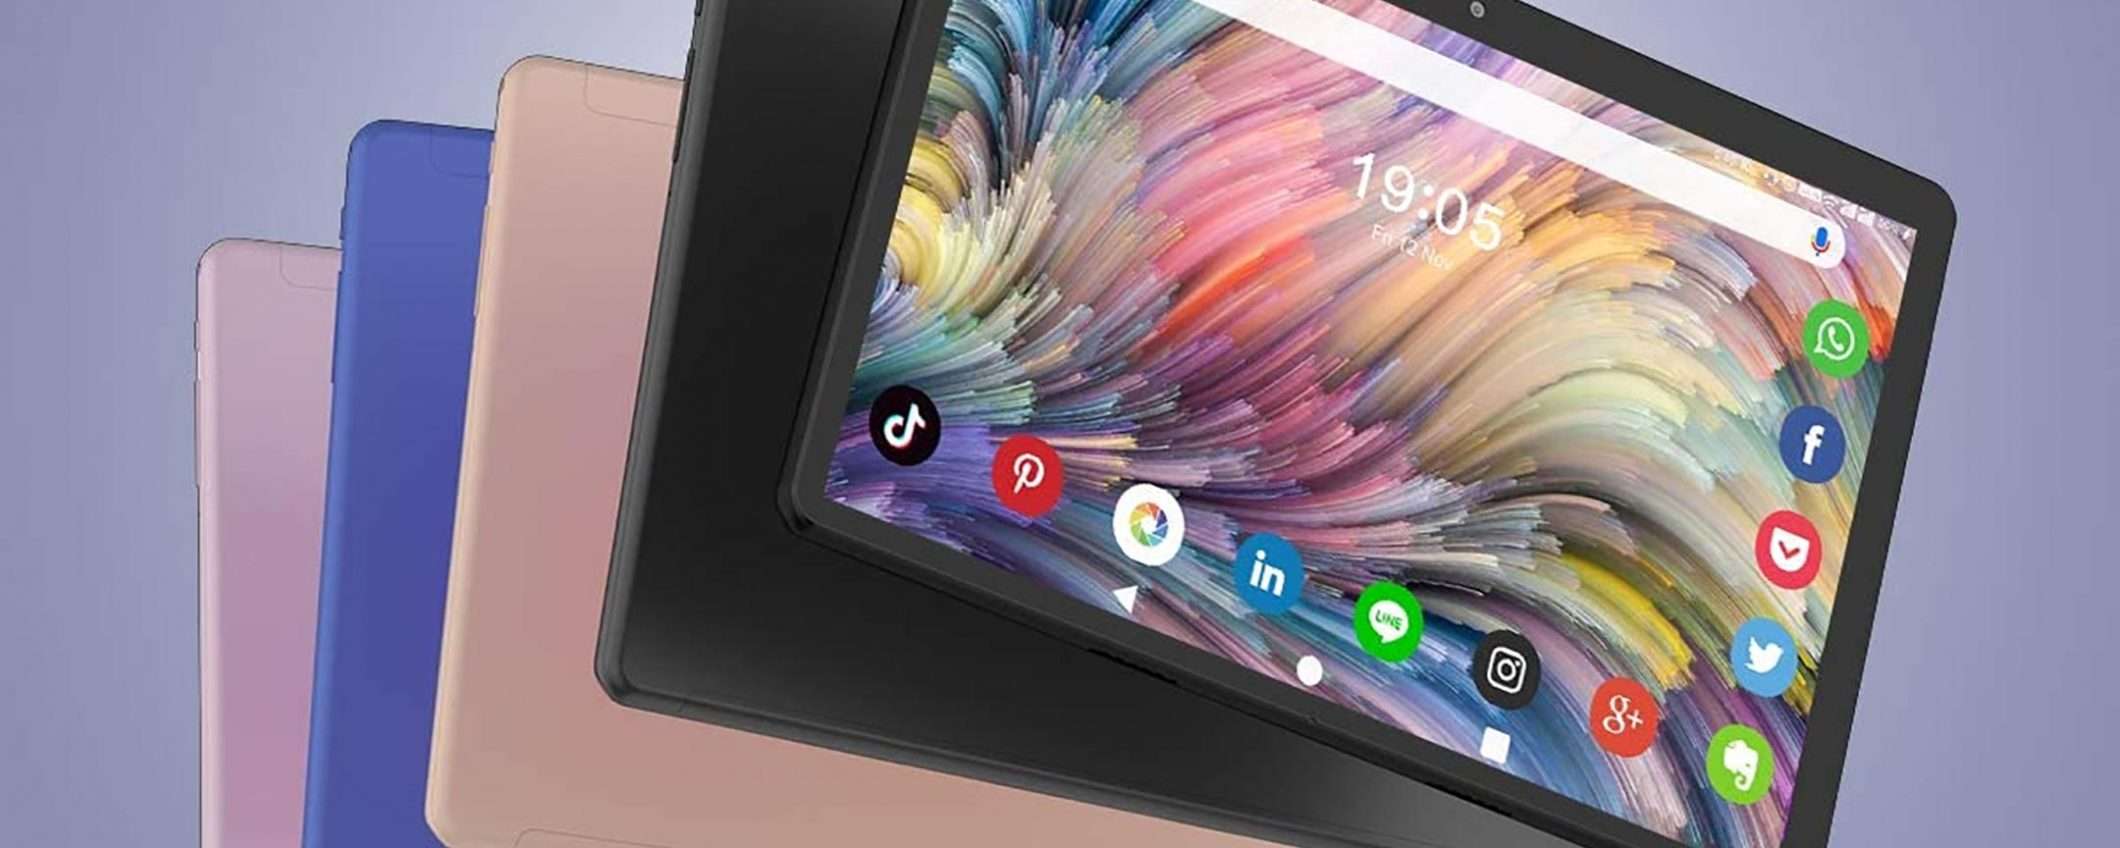 Un tablet Android da 10 pollici a meno di 80 euro?